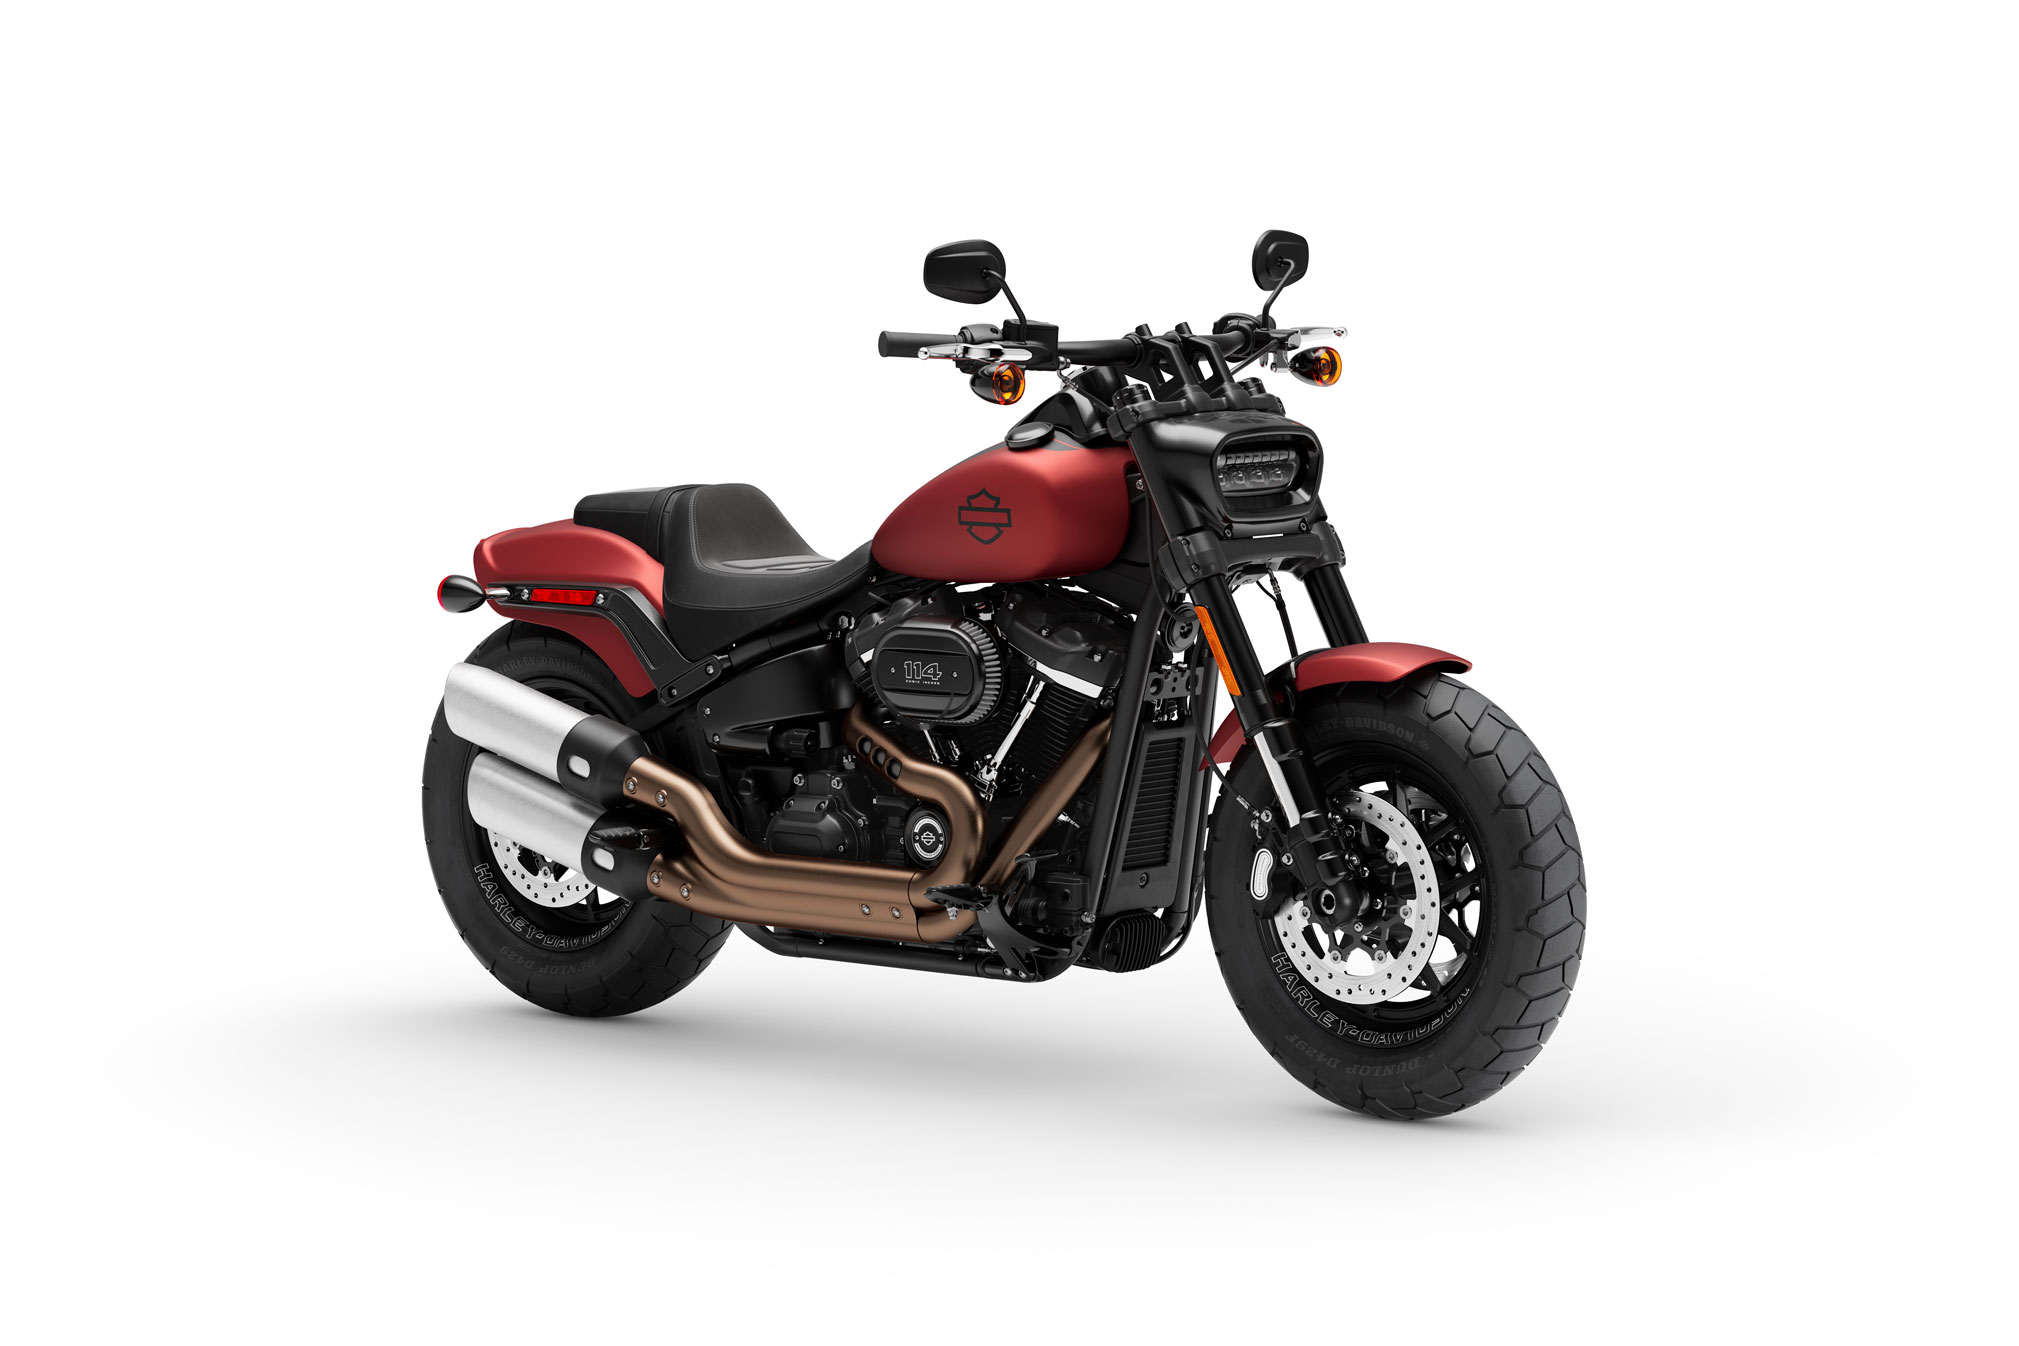  2019 Harley Davidson Fat Bob 114 Guide Total Motorcycle